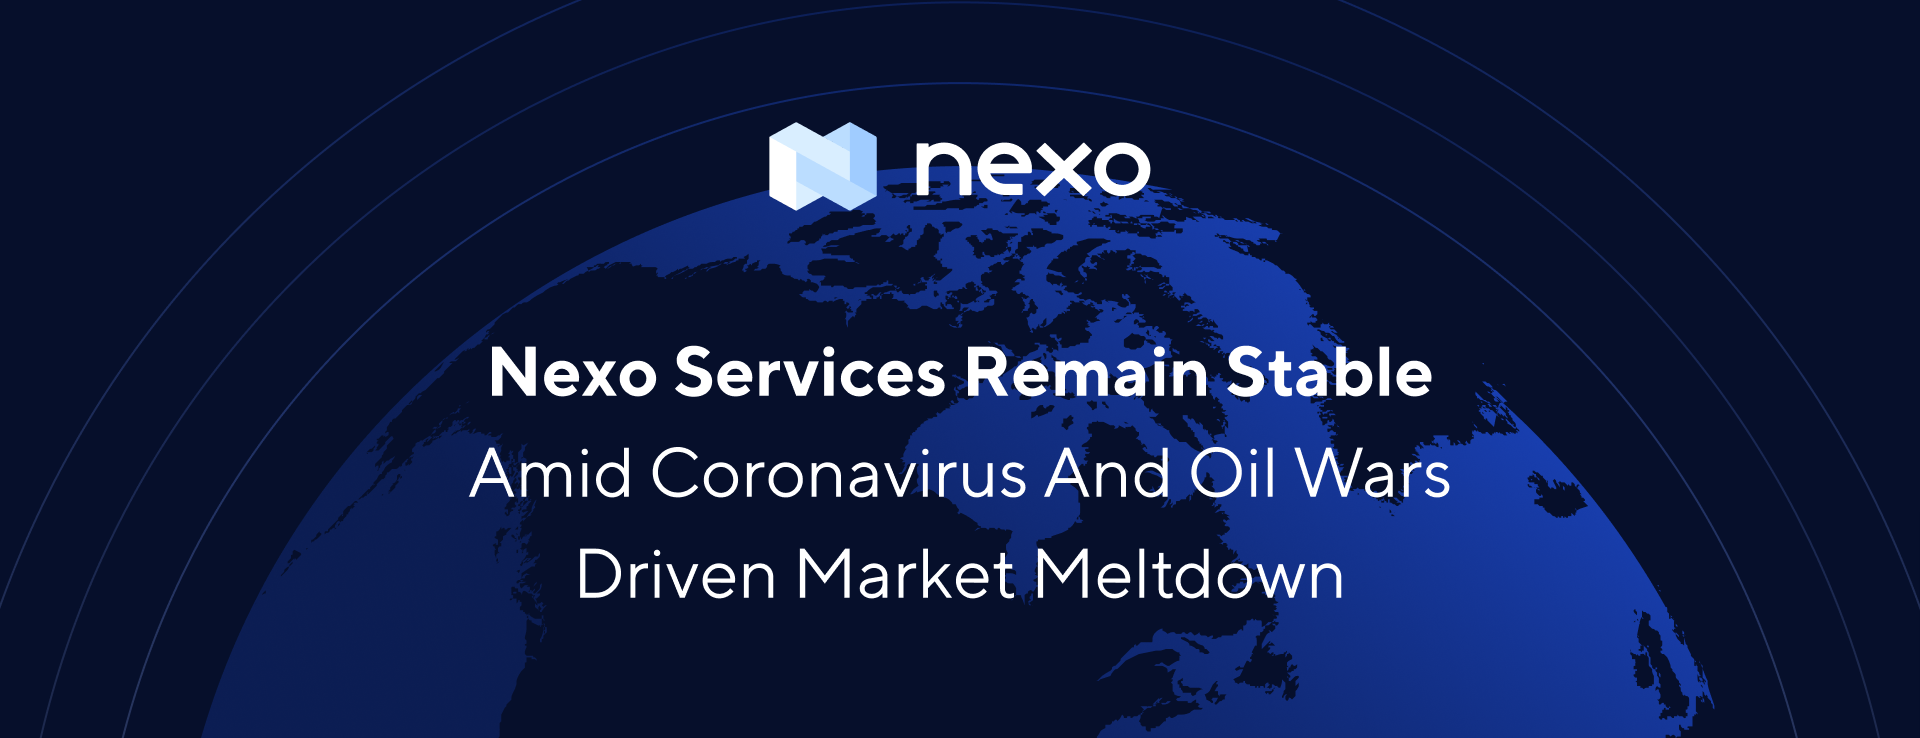 Nexo Services Remain Stable Amid Coronavirus and Oil Wars Driven Market Meltdown